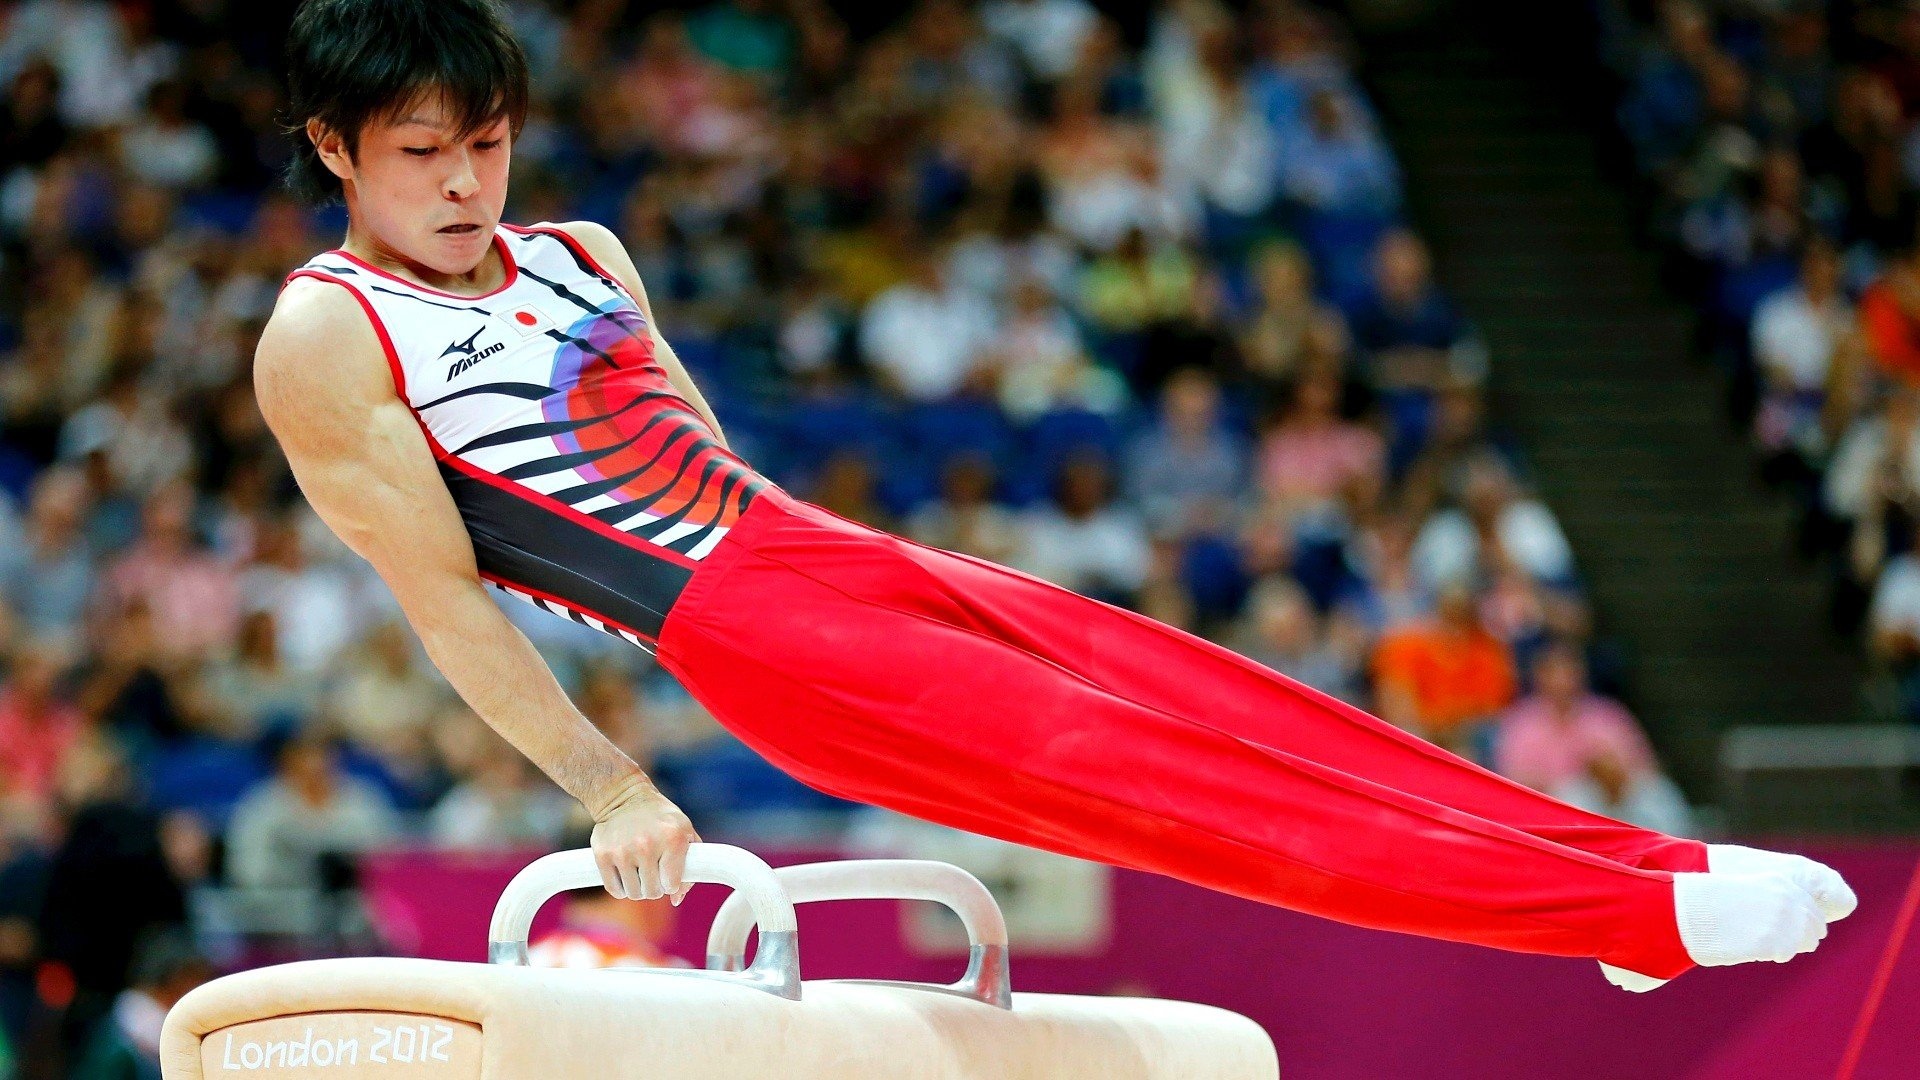 Pommel Horse (Gymnastics): Olympics 2012, Kohei Uchimura, The legendary Japanese men's gymnast. 1920x1080 Full HD Background.